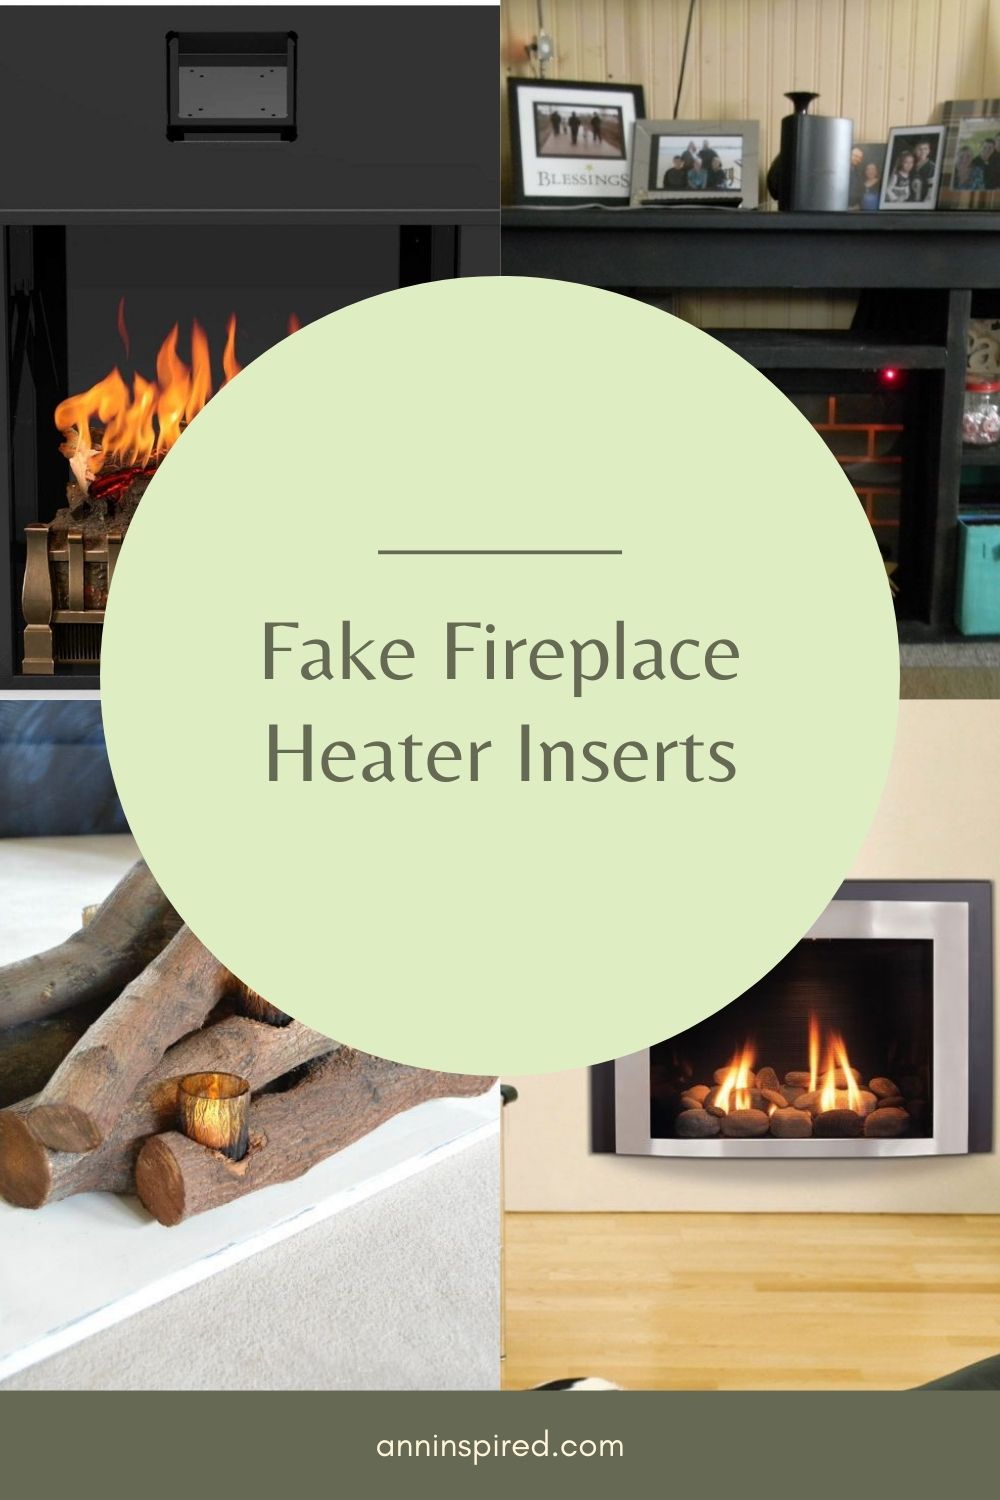 Fake Fireplace Heater Inserts